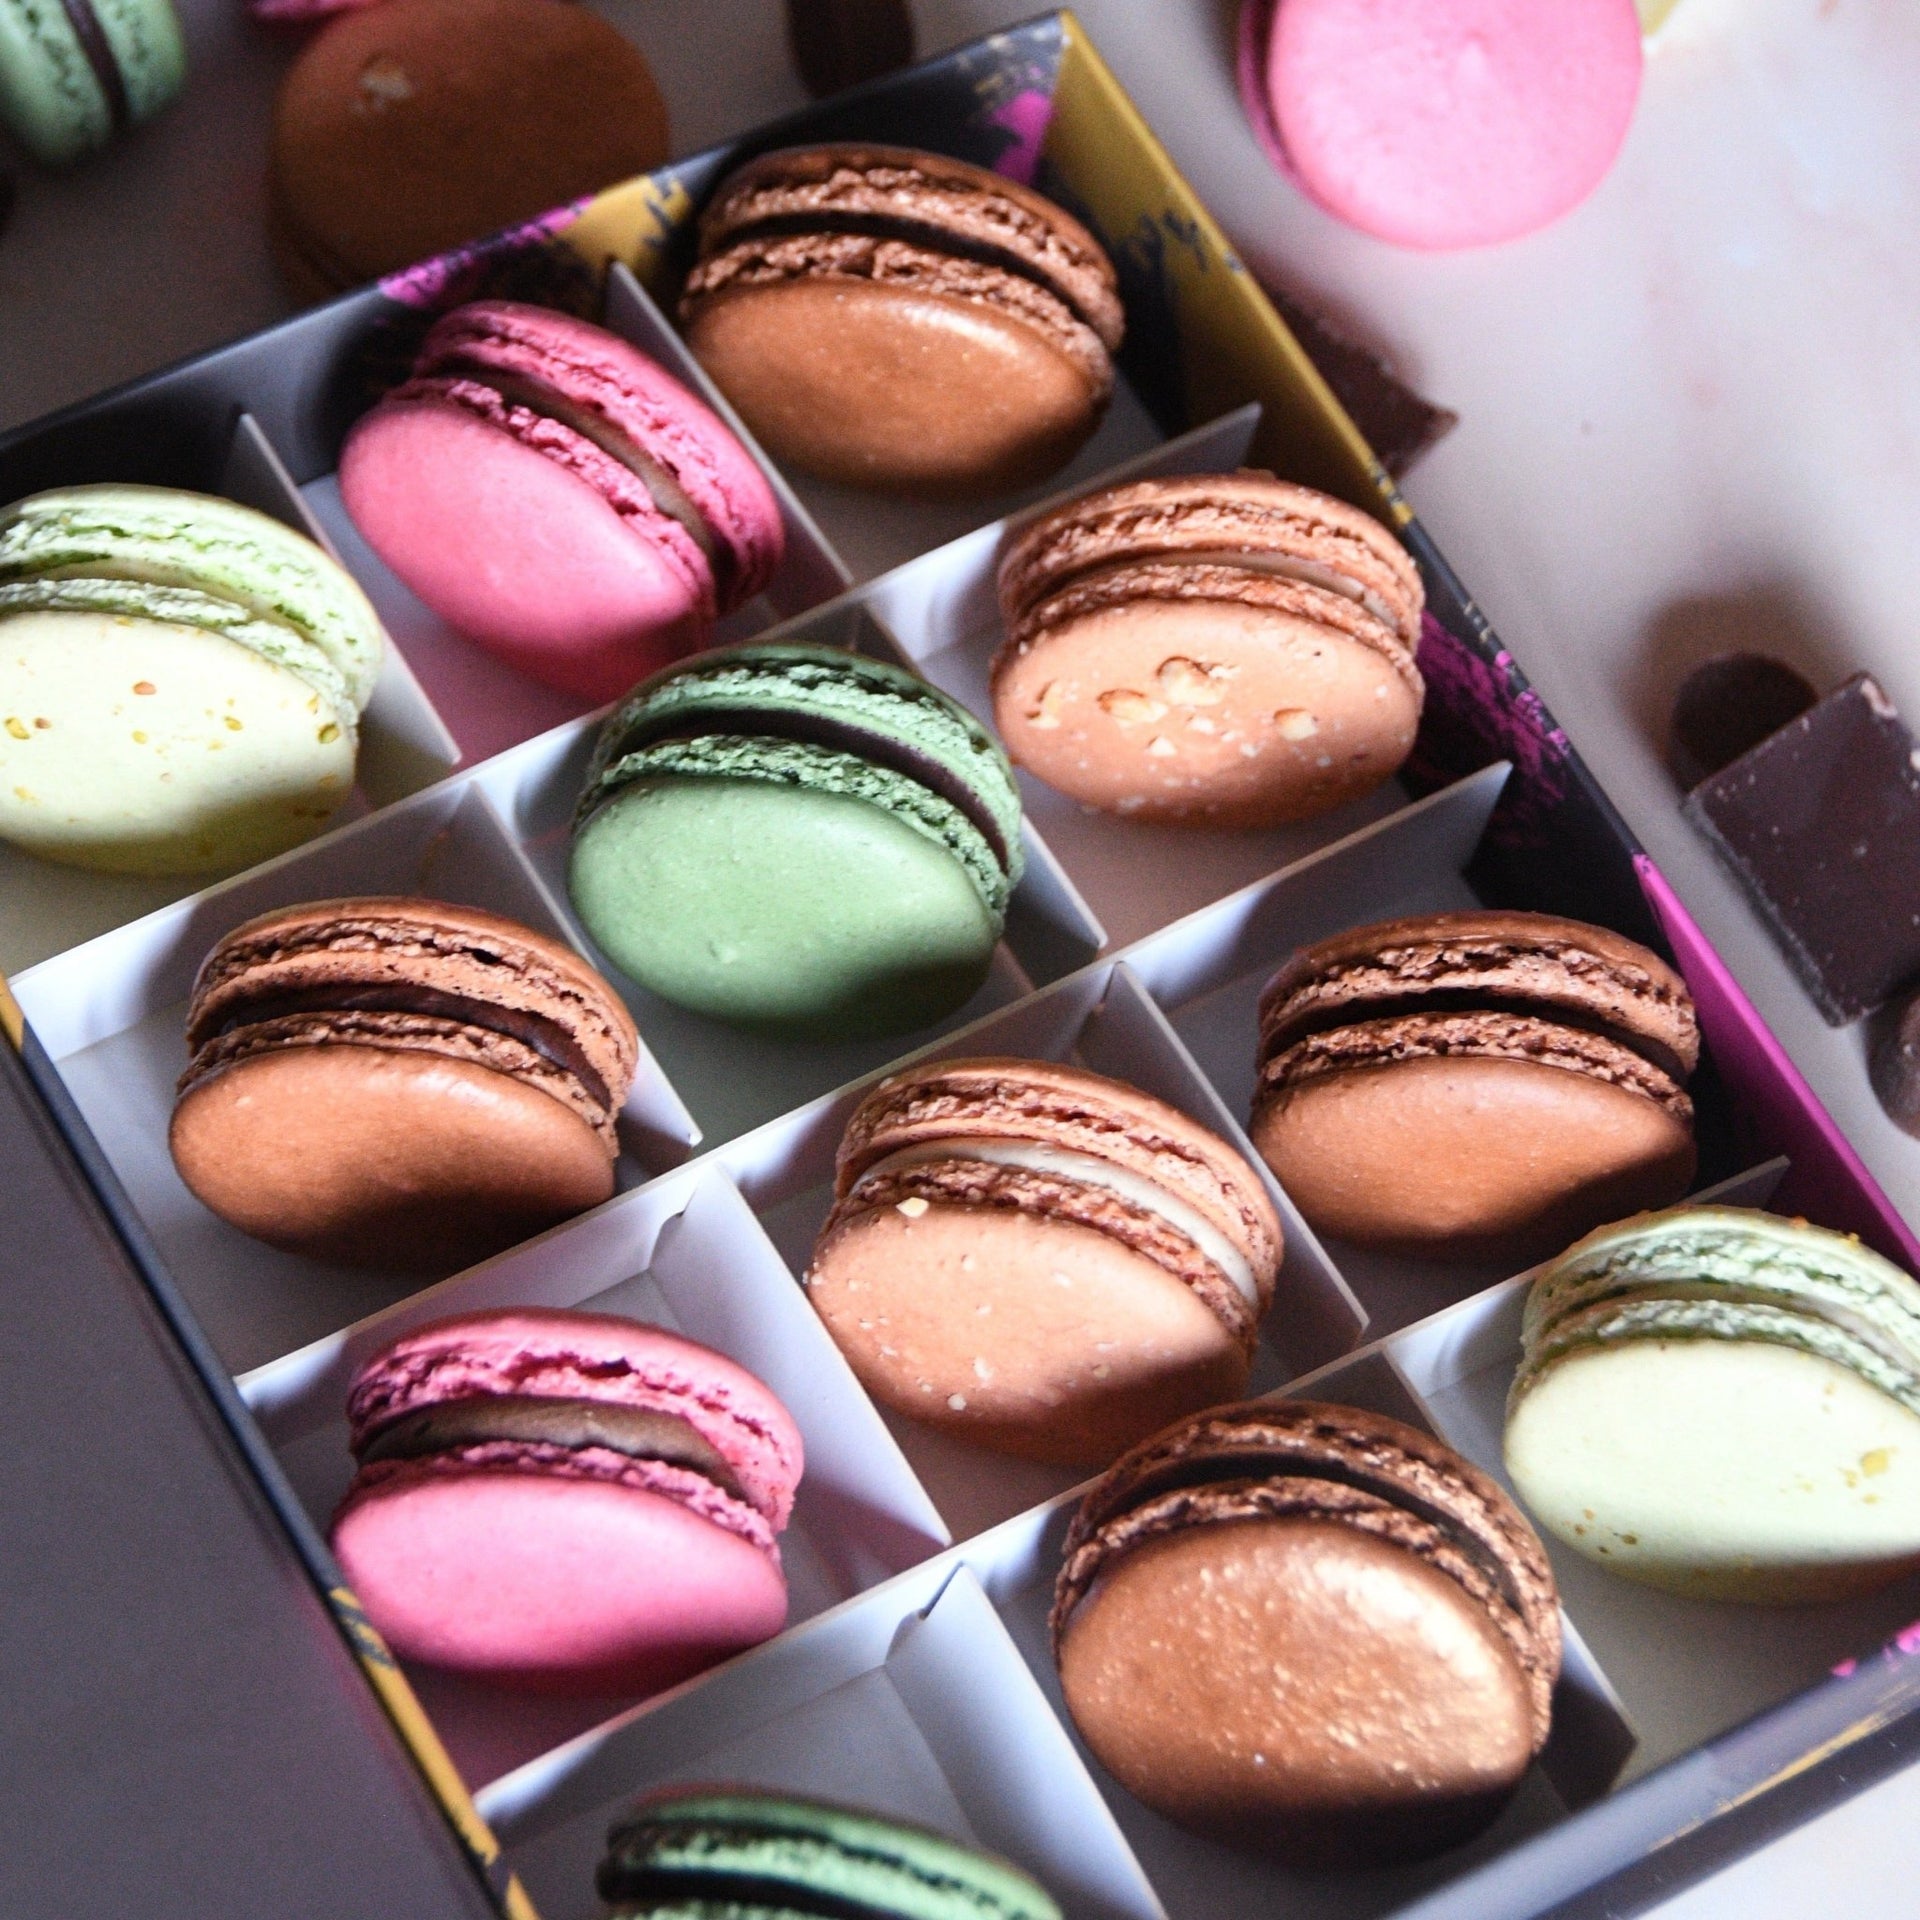 Chocolate Lover's Macaron Gift Box - Made Scotland - Macaron Gift Box